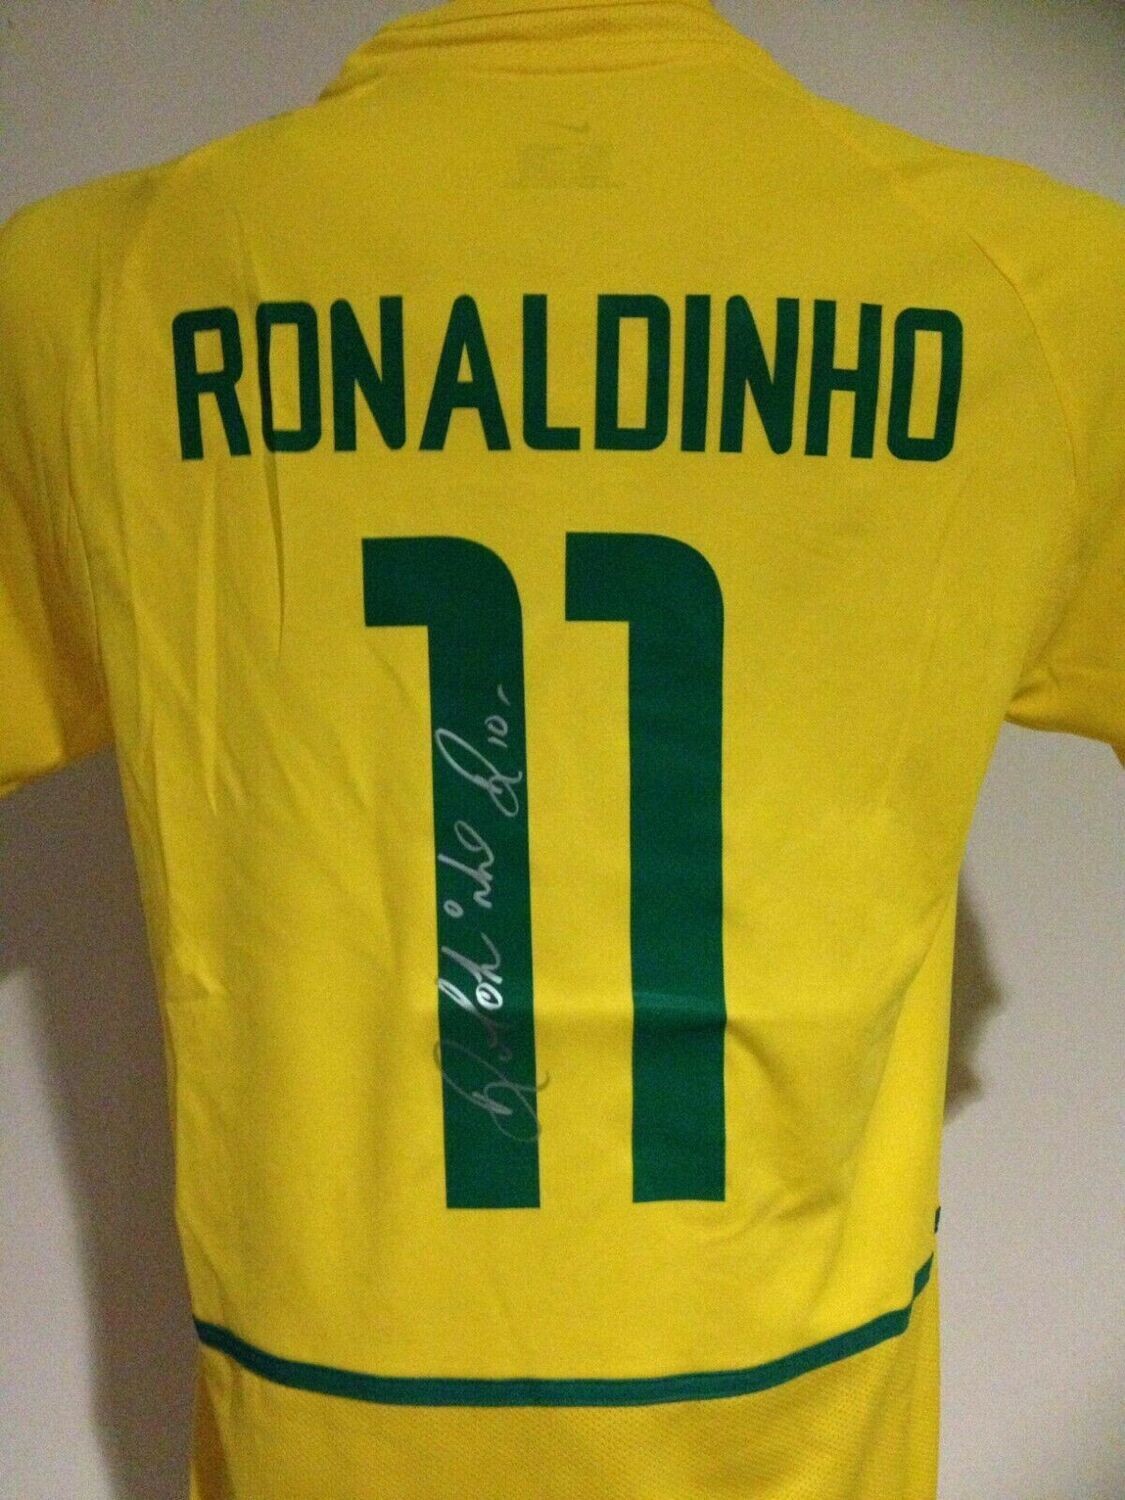 Brasile  Autografata da RONALDINHO 11  2002 con certificato di autenticita' Signed From Ronaldinho 11  with certificate coa of authetincitiy SPEDIZ GRATIS SHIPPING FREE